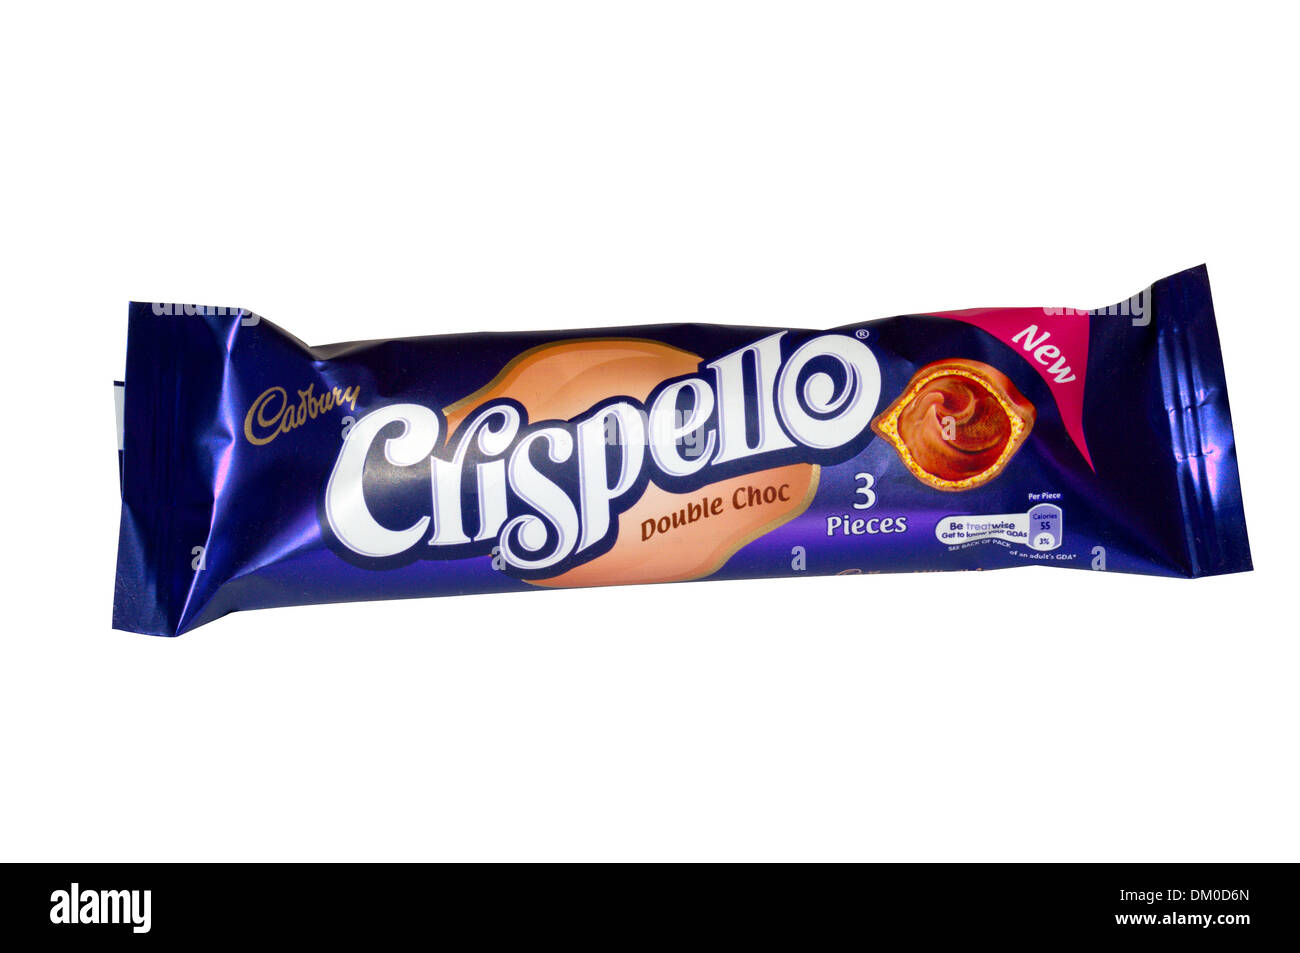 A Cadbury's Crispello chocolate bar. Stock Photo